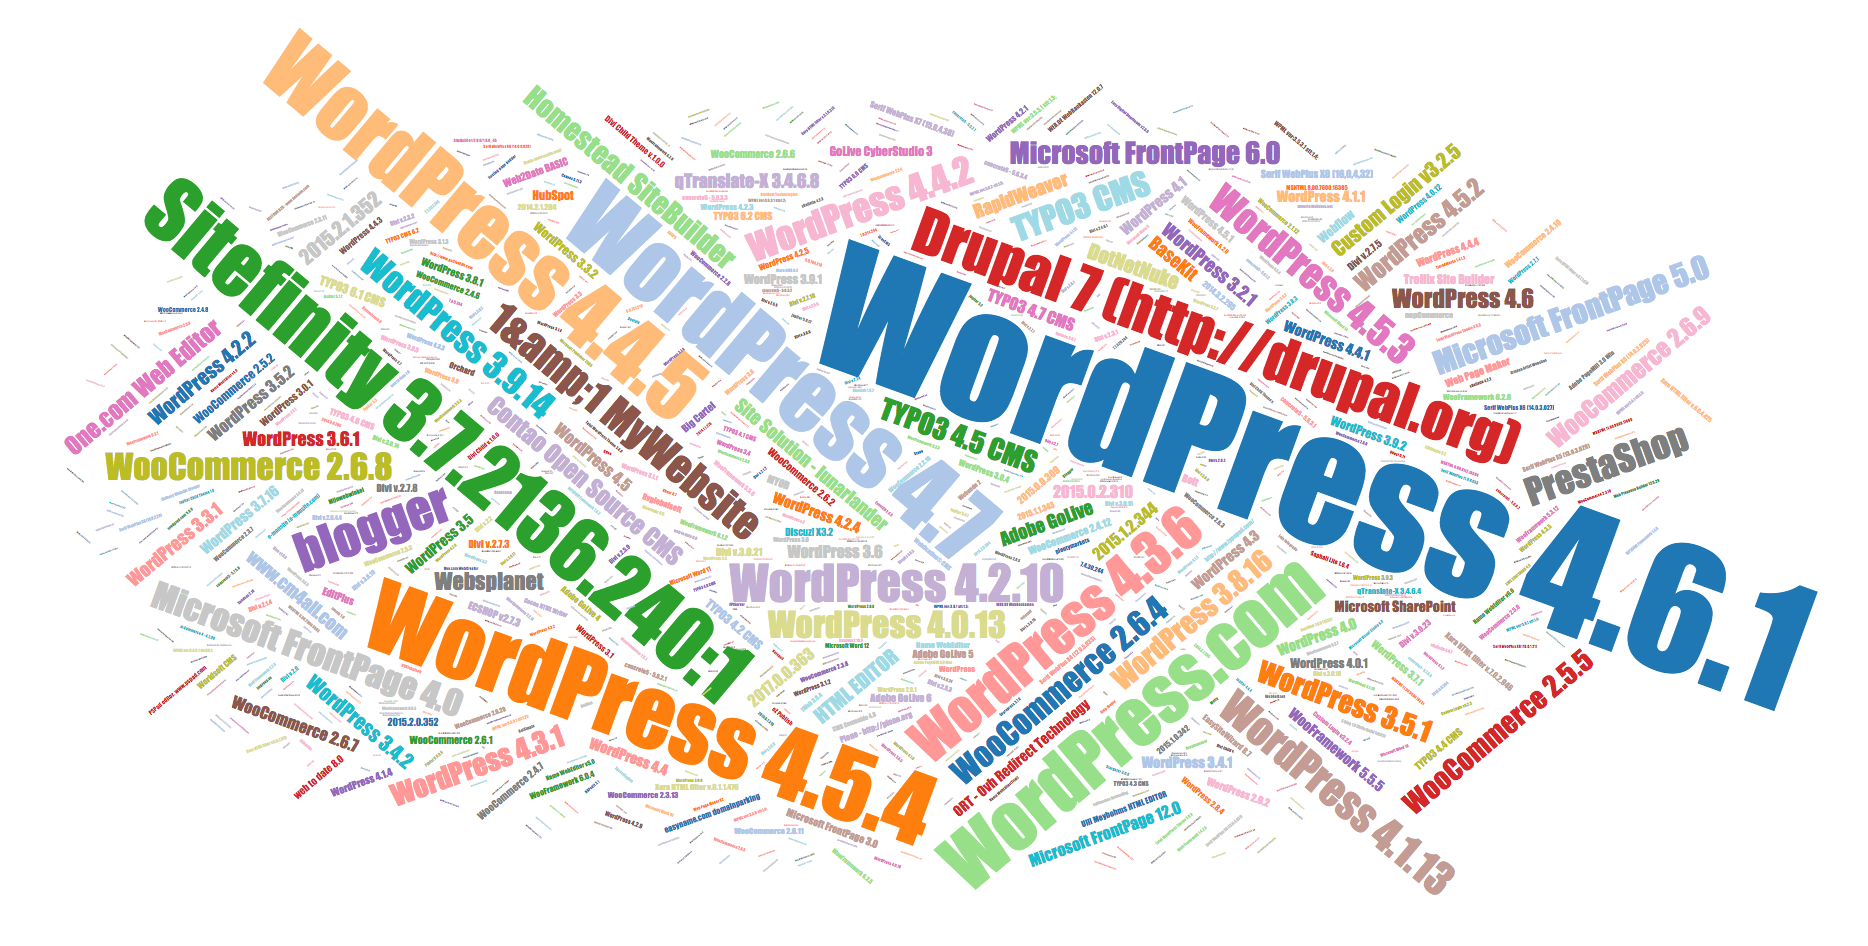 Popular meta-generator values WordPress 4.9.2, WordPress 4.9.1, etc.